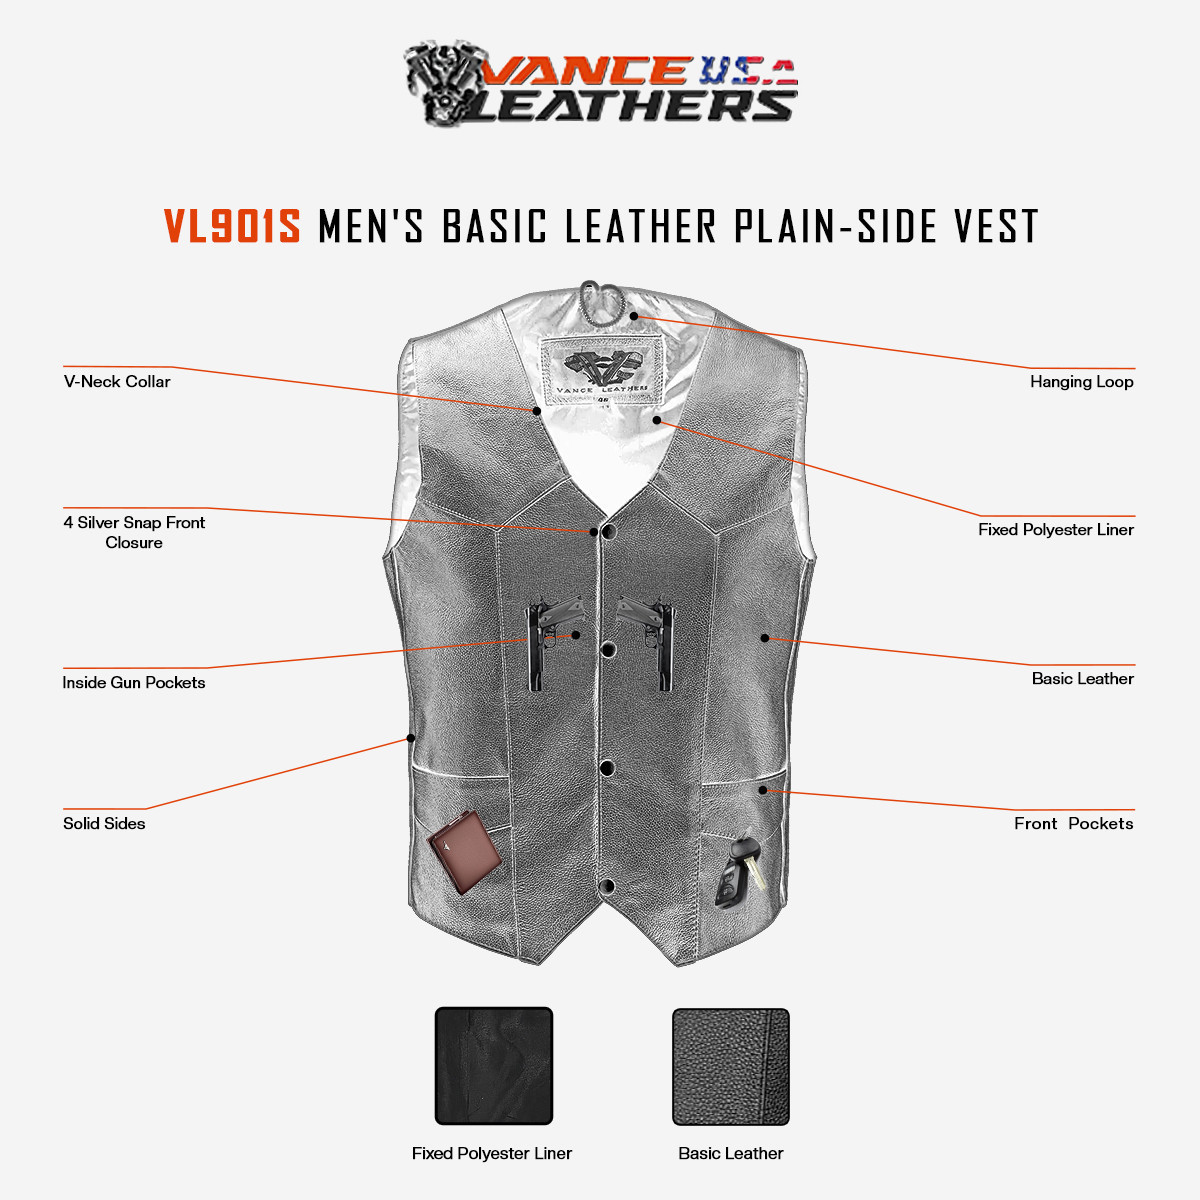 vance-leather-basic-leather-plain-side-vest-description-infographics.jpg